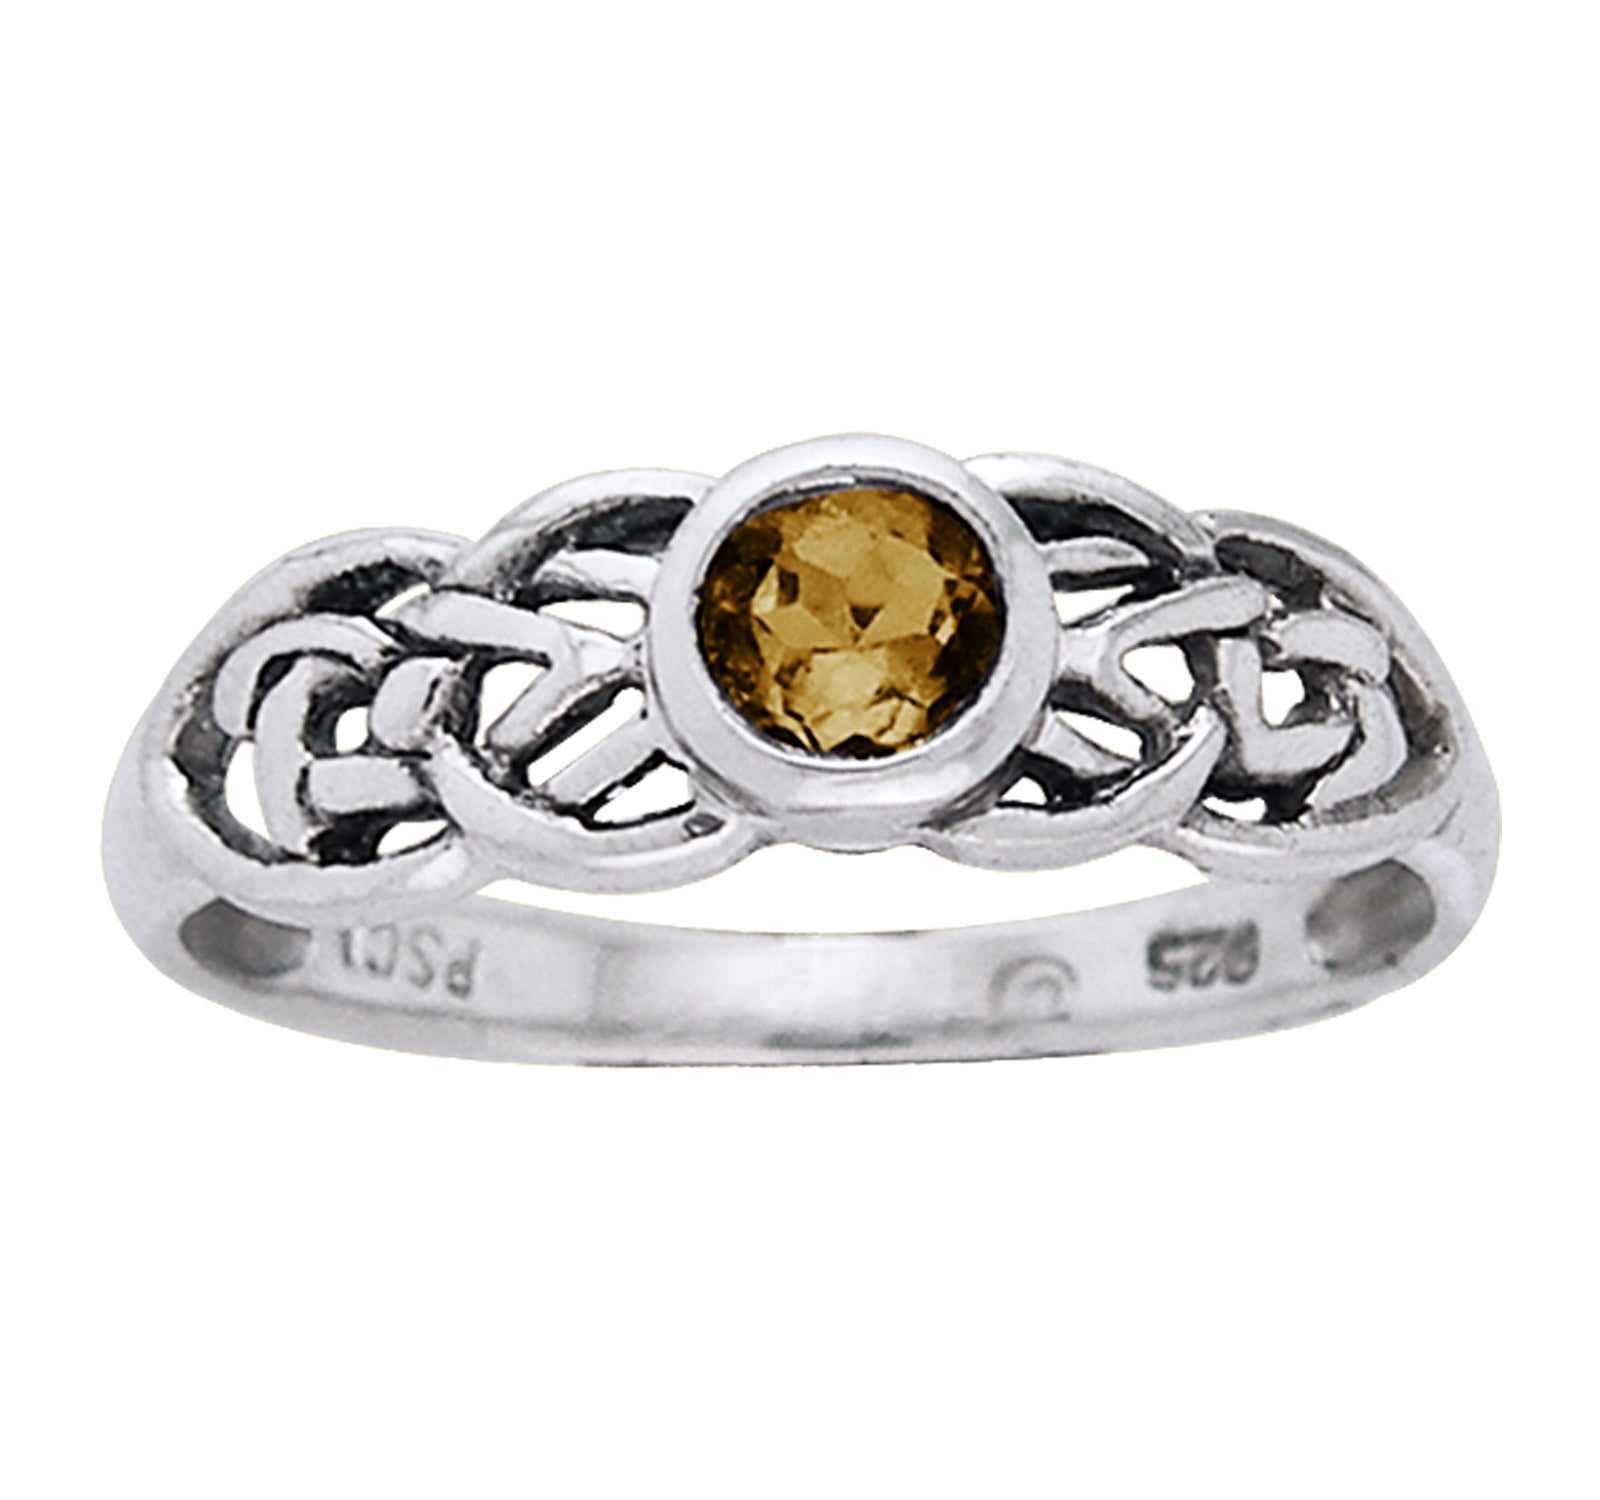 Petite Celtic Knot Birthstone Ring Sterling Silver Genuine Citrine For November - Silver Insanity